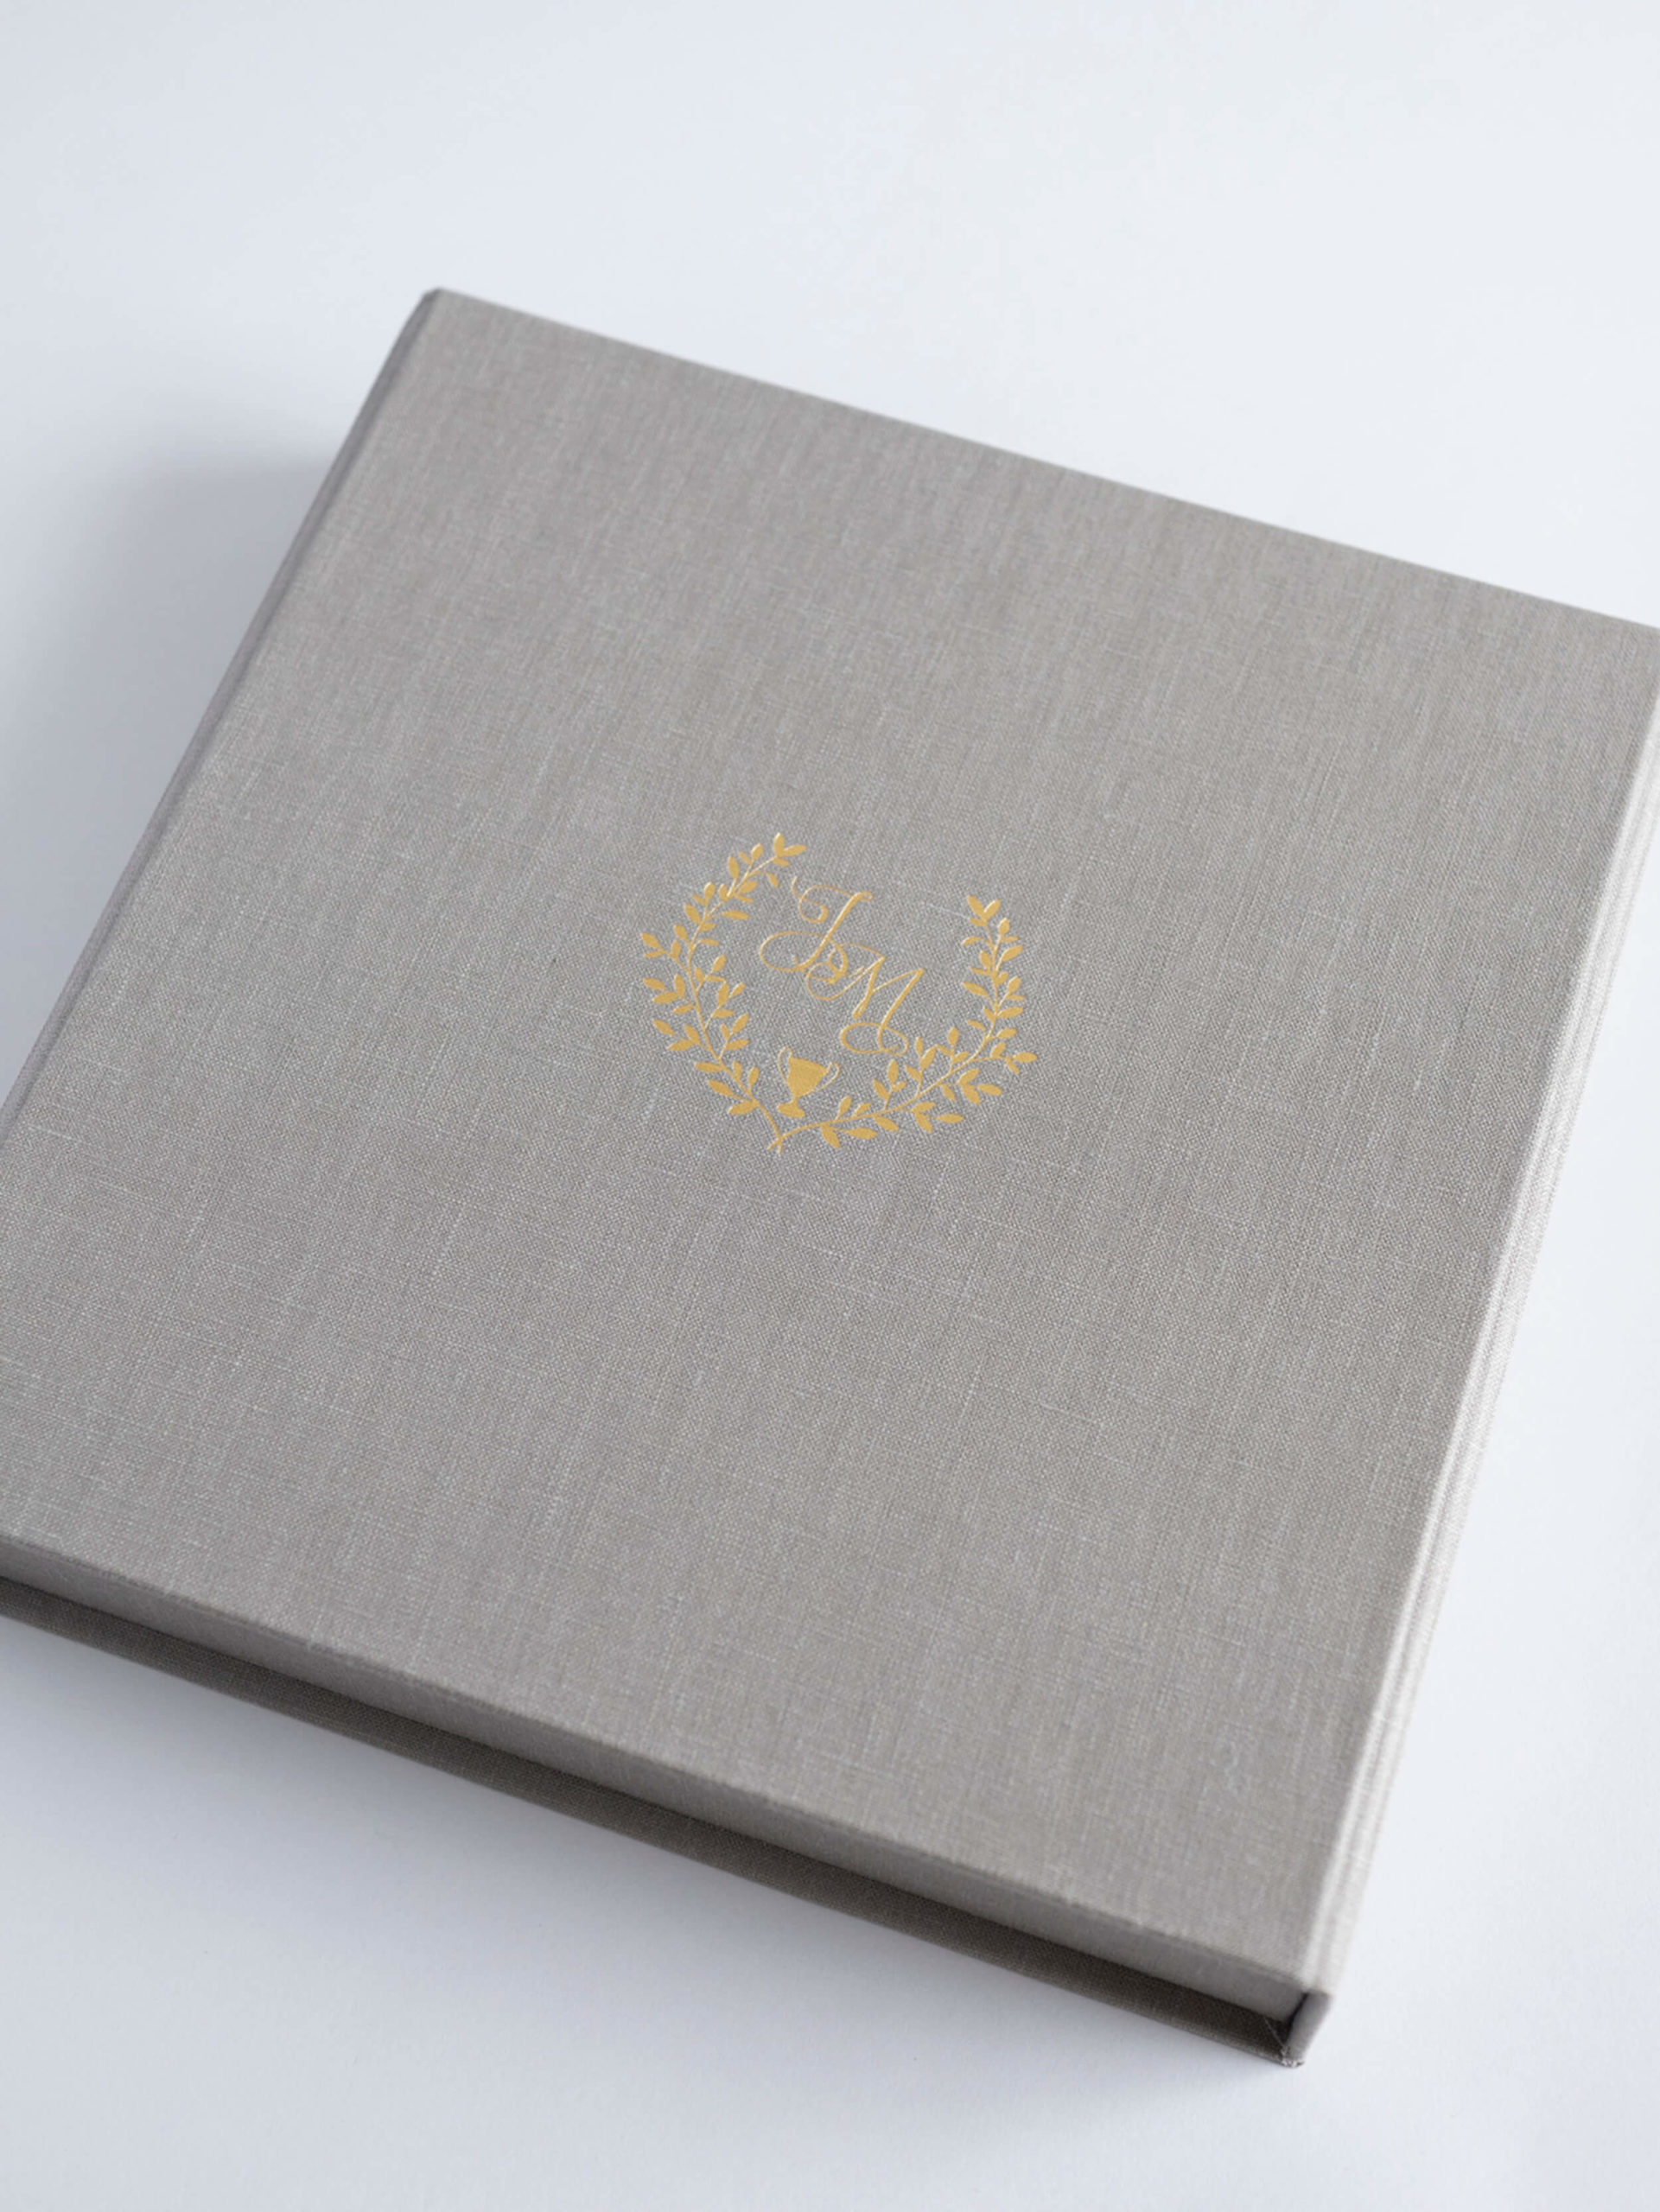 gray linen wedding album box